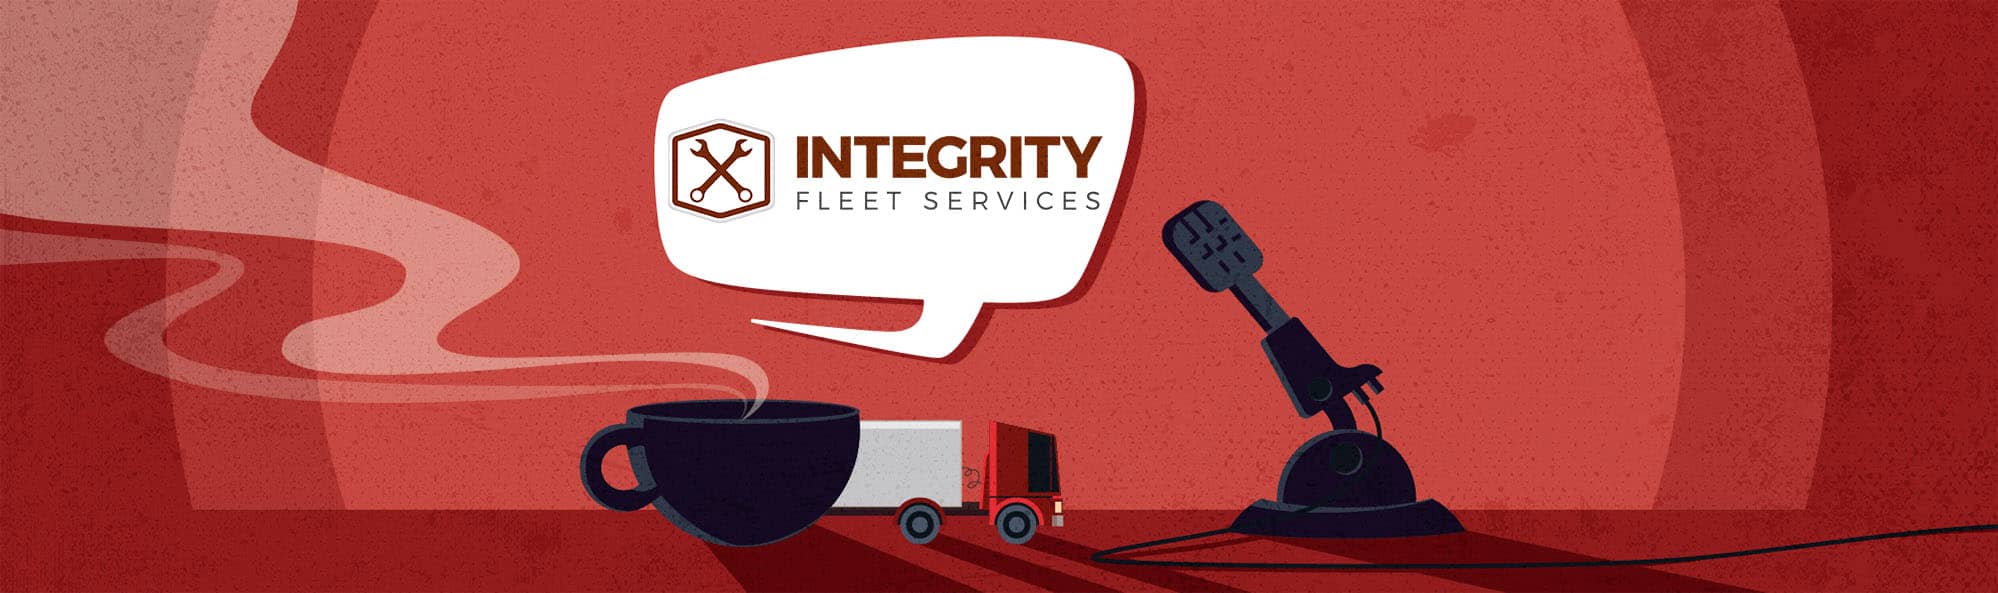 Shop Stories: Integrity Fleet Services